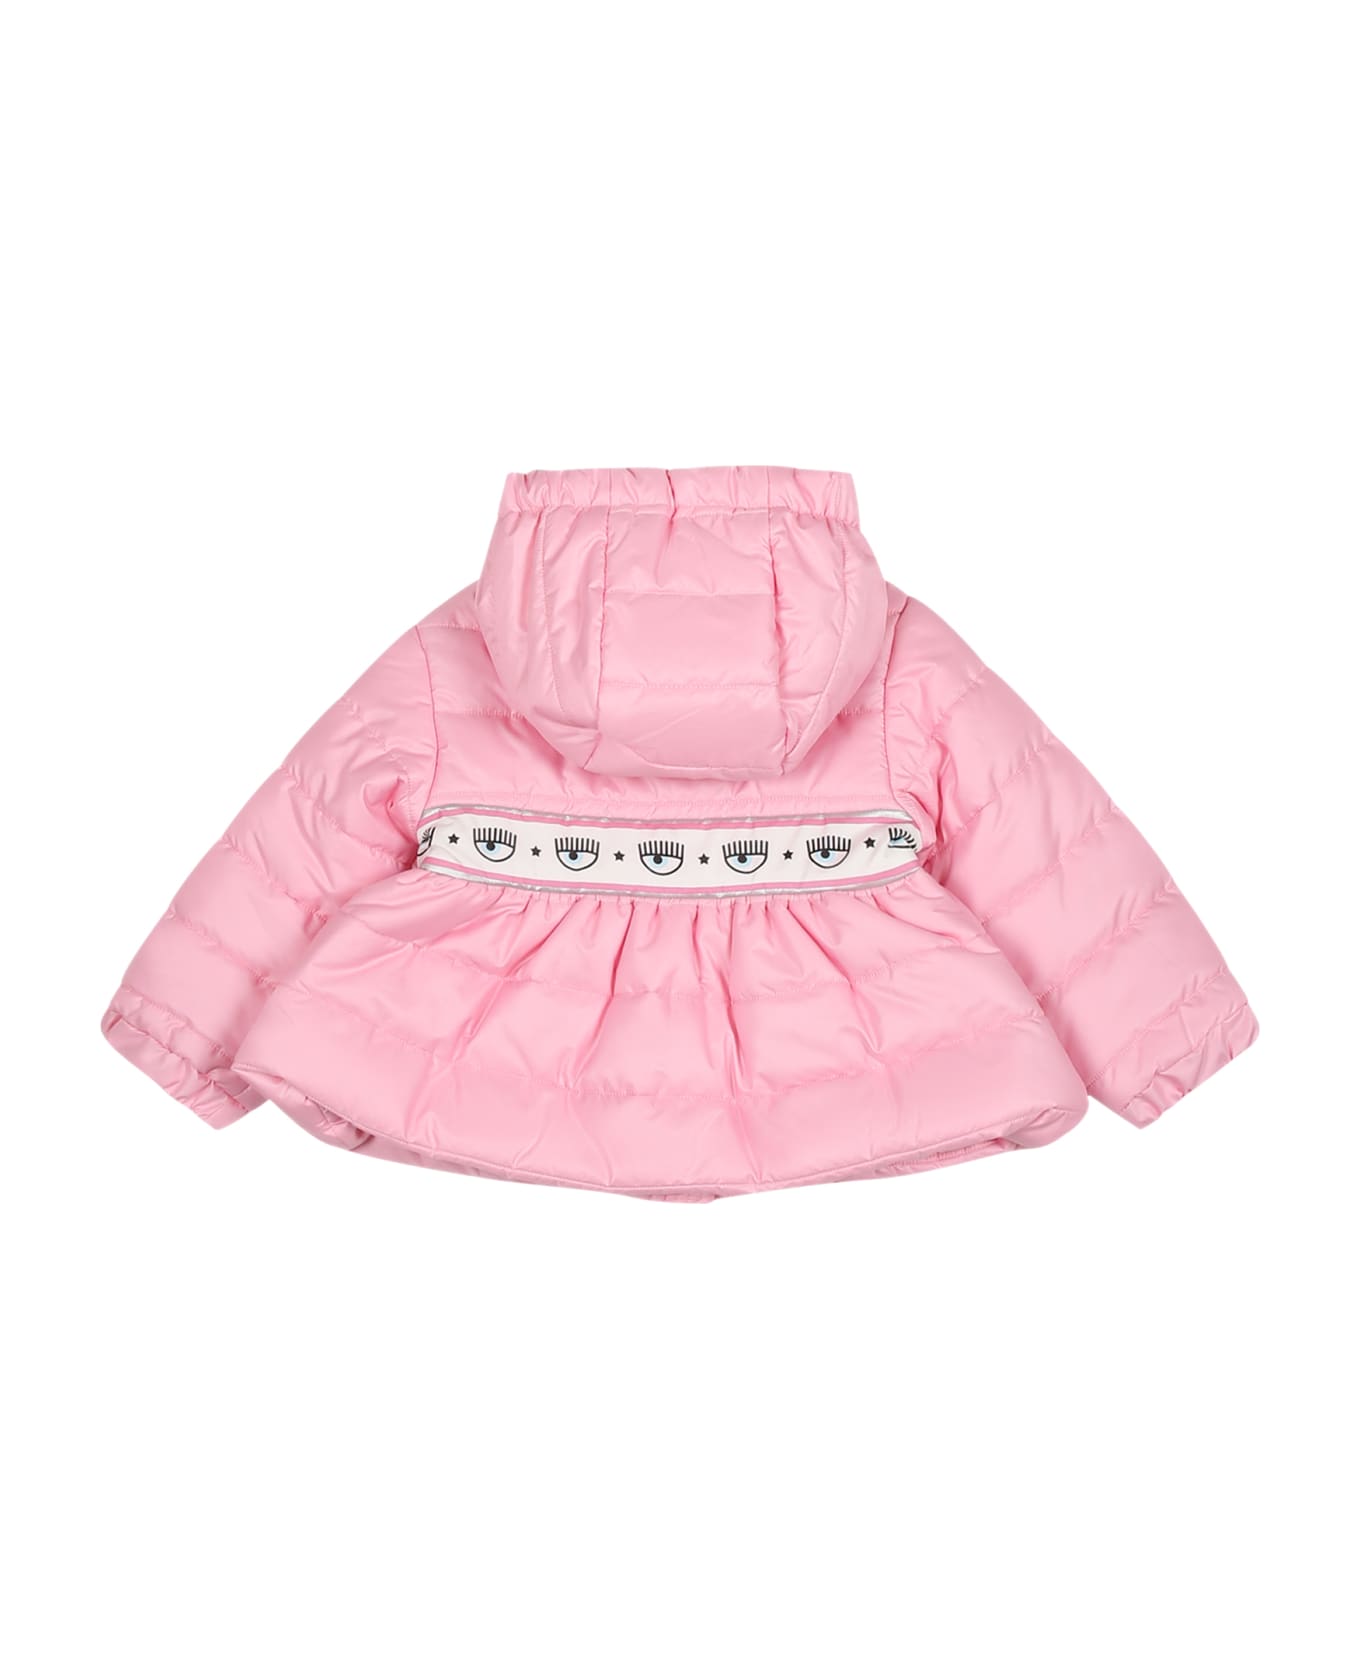 Chiara Ferragni Pink Down Jacket For Baby Girl With Eyestar - Pink